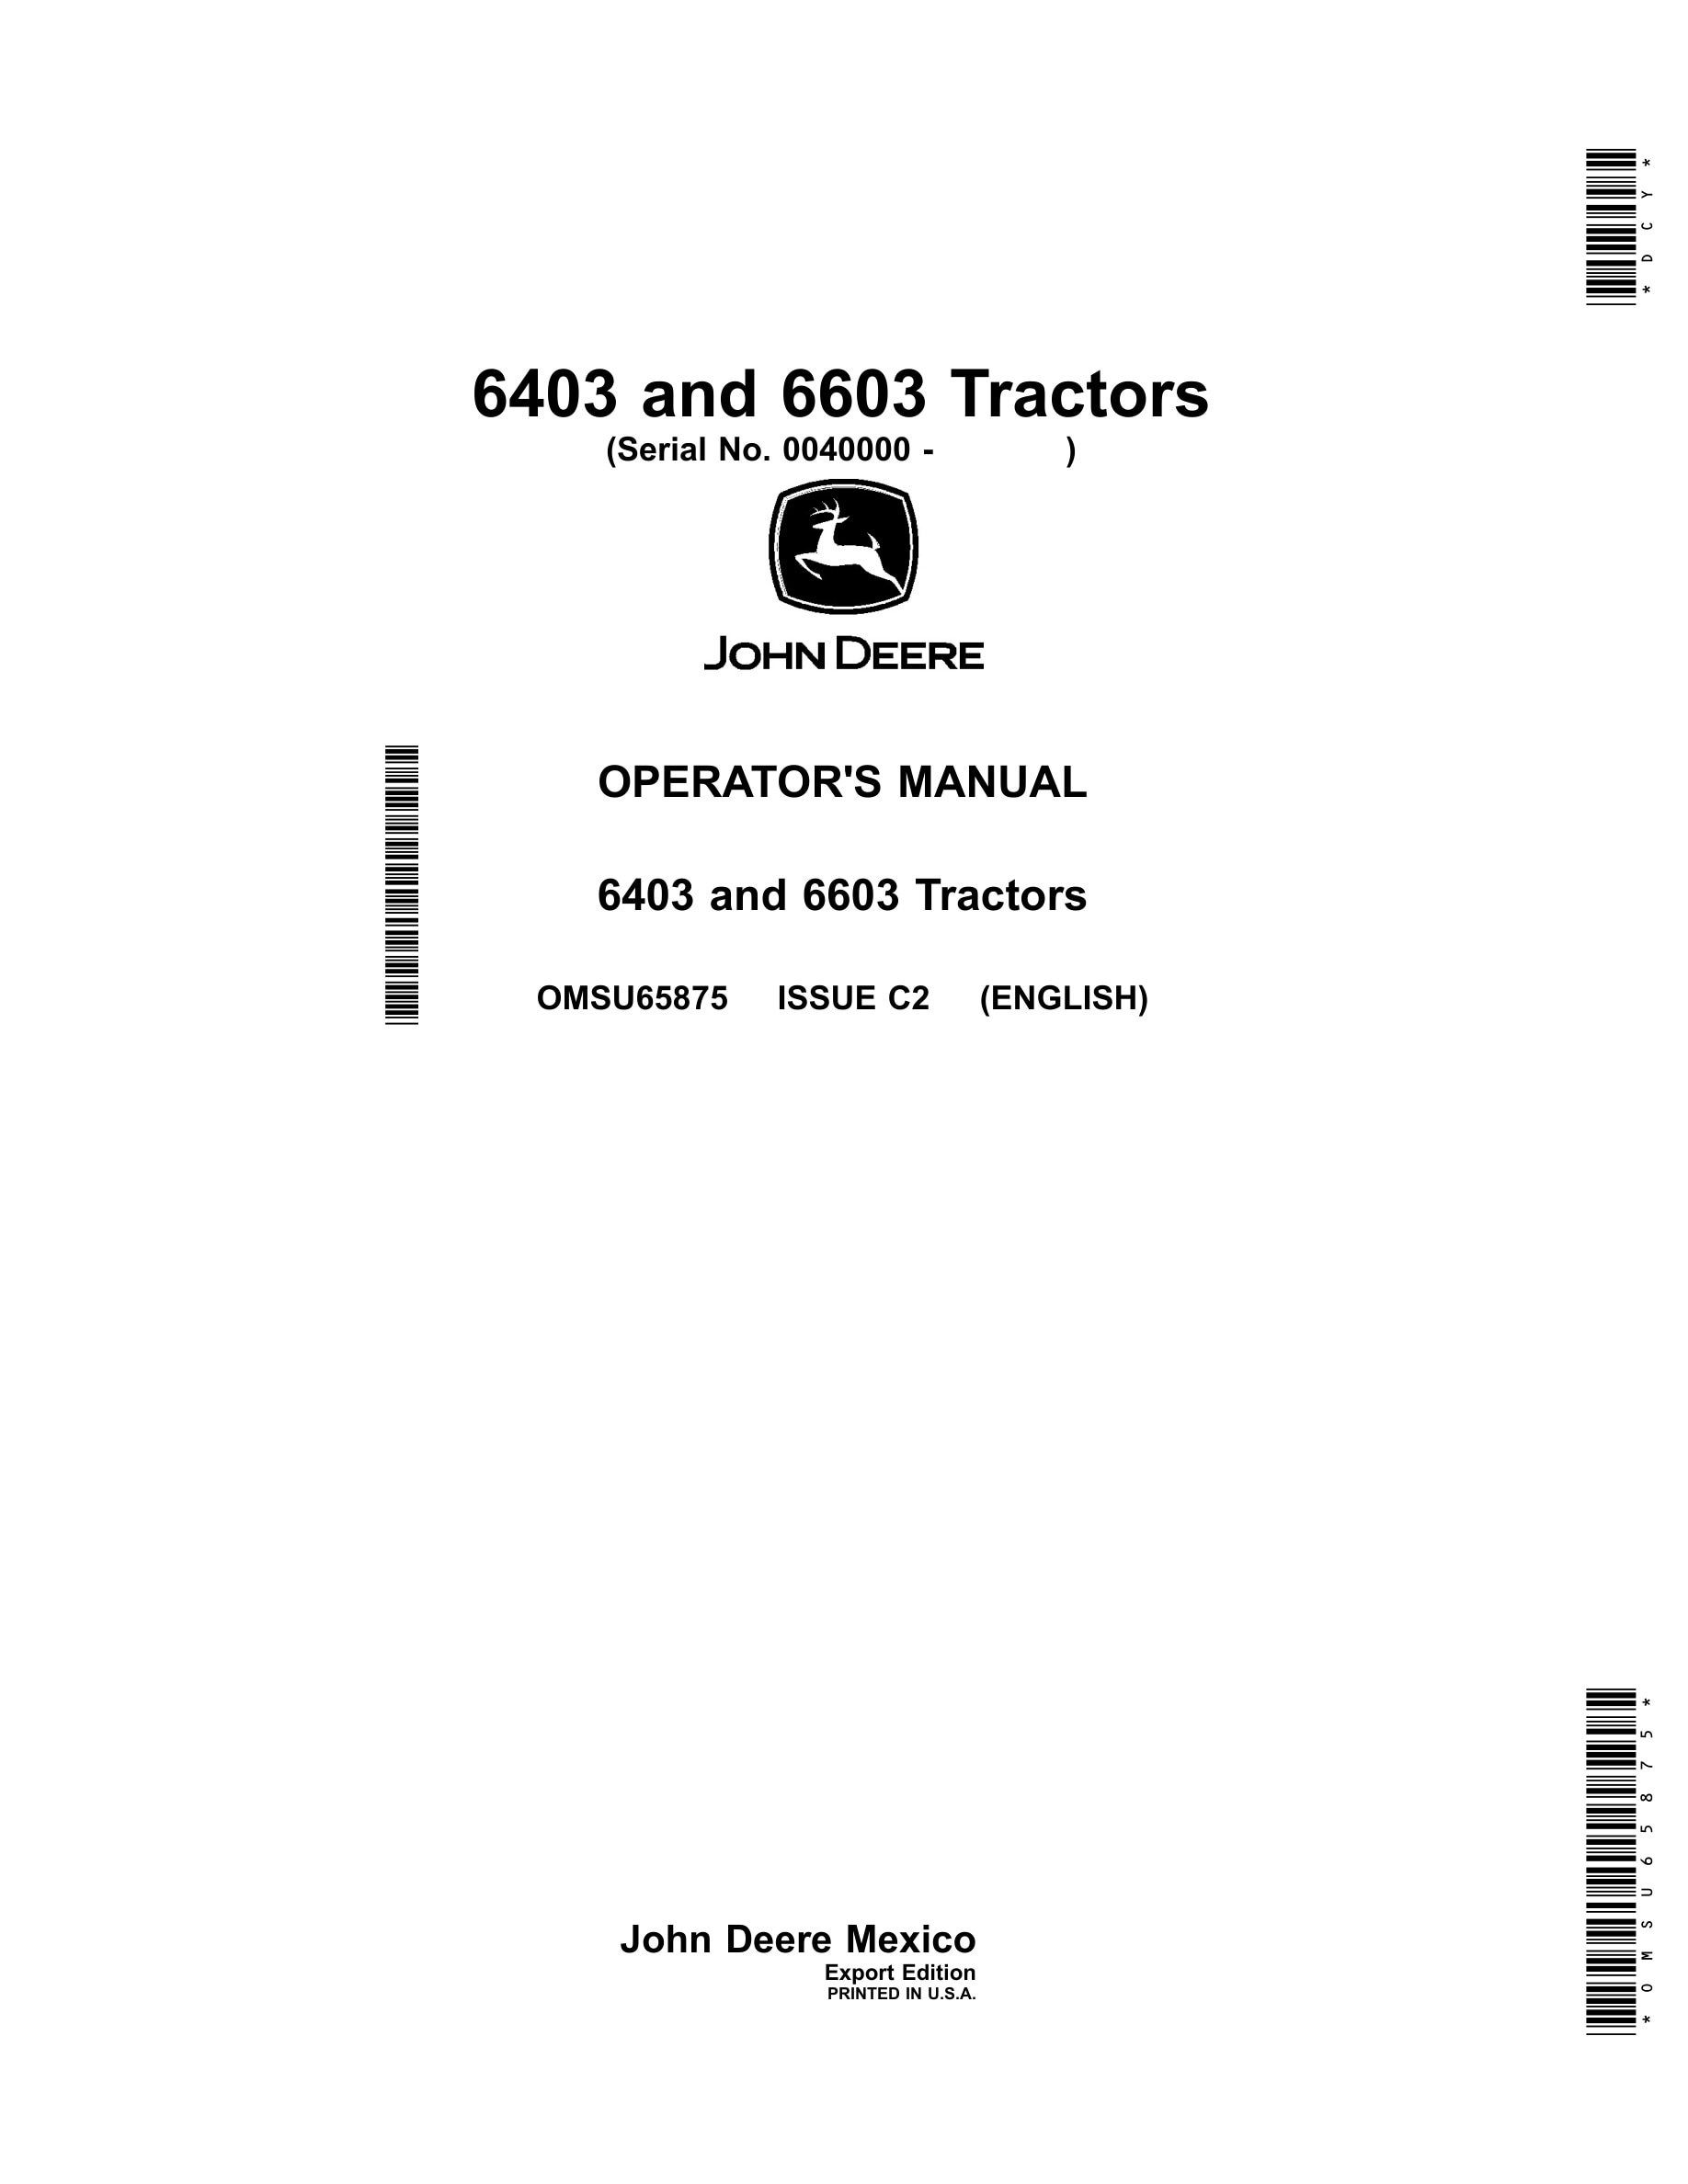 John Deere 6403 And 6603 Tractors Operator Manuals OMSU65875-1